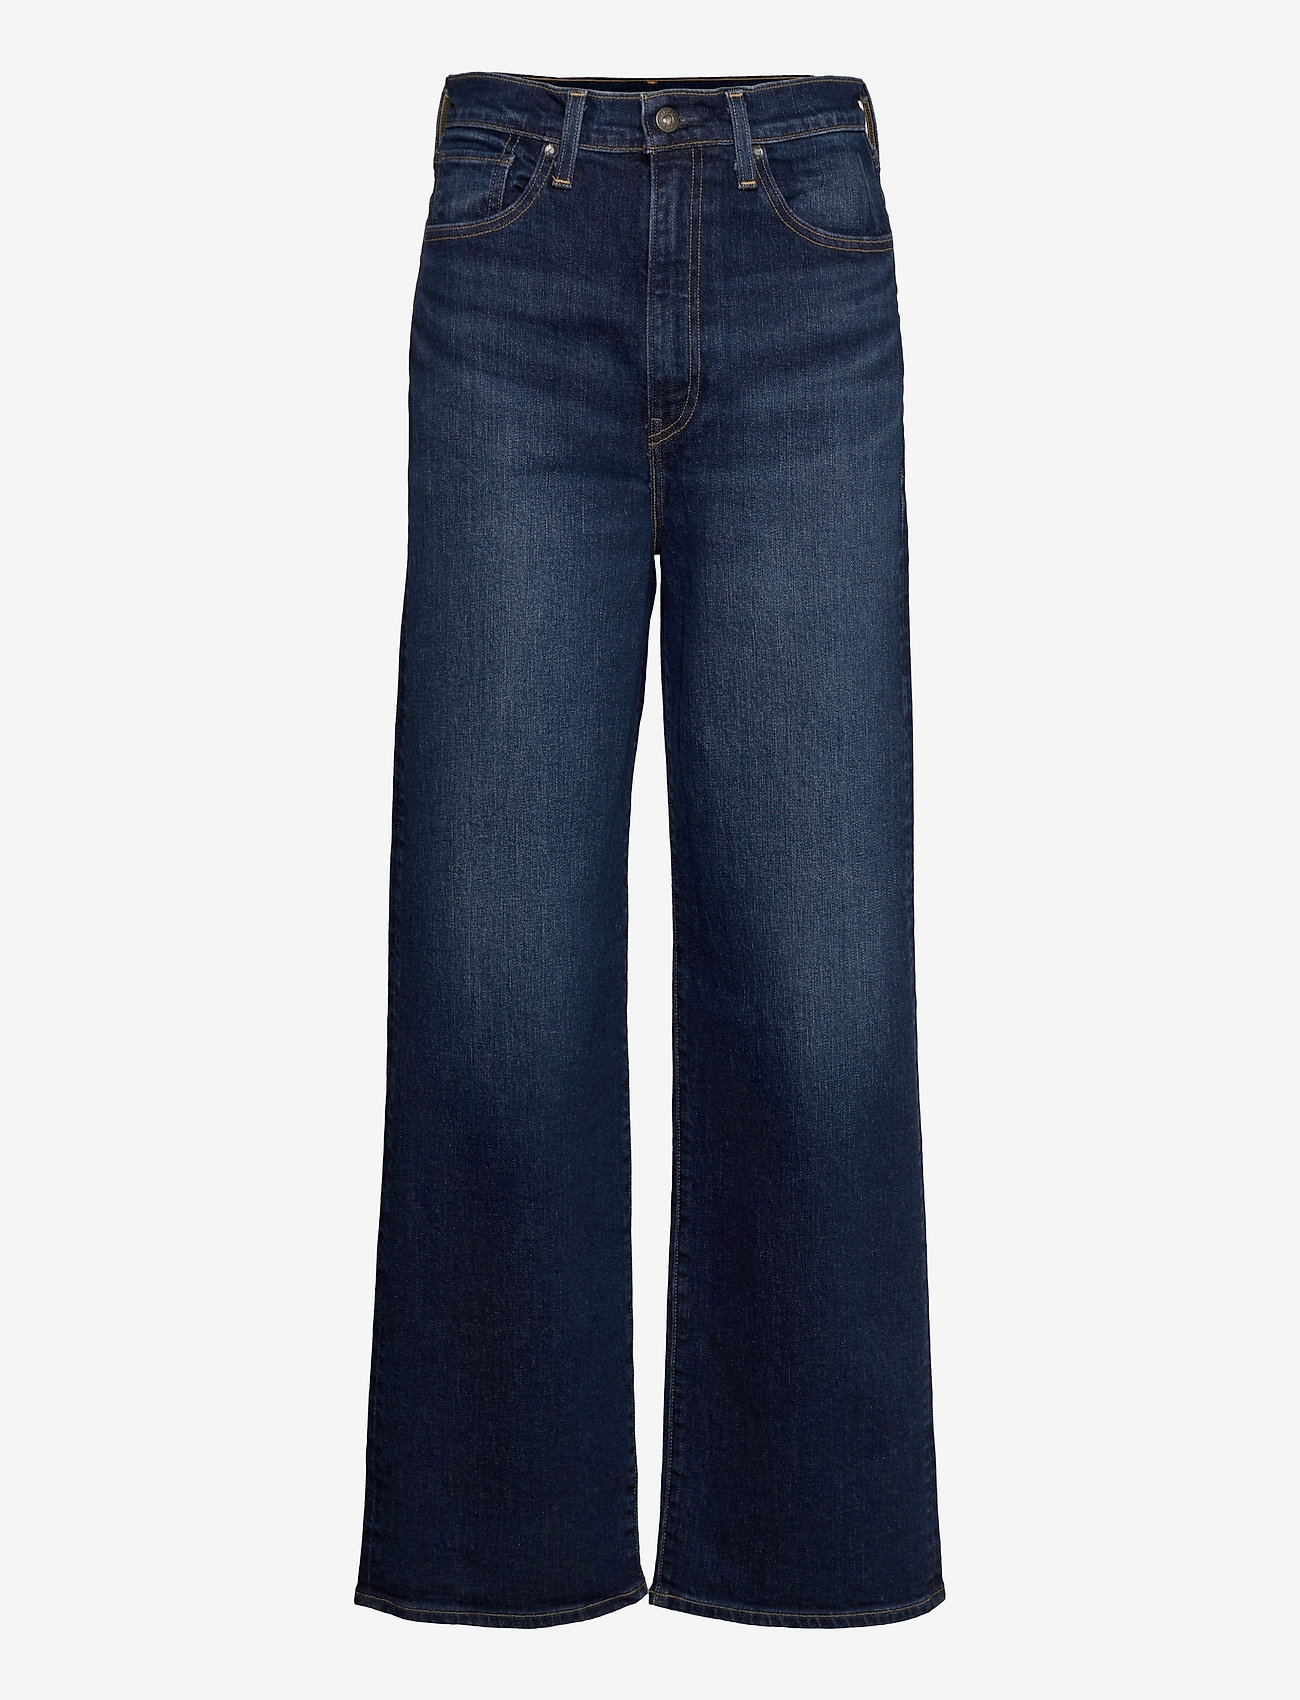 Levi's Made & Crafted - LMC HIGH LOOSE LMC NAMI - vida jeans - dark indigo - worn in - 0